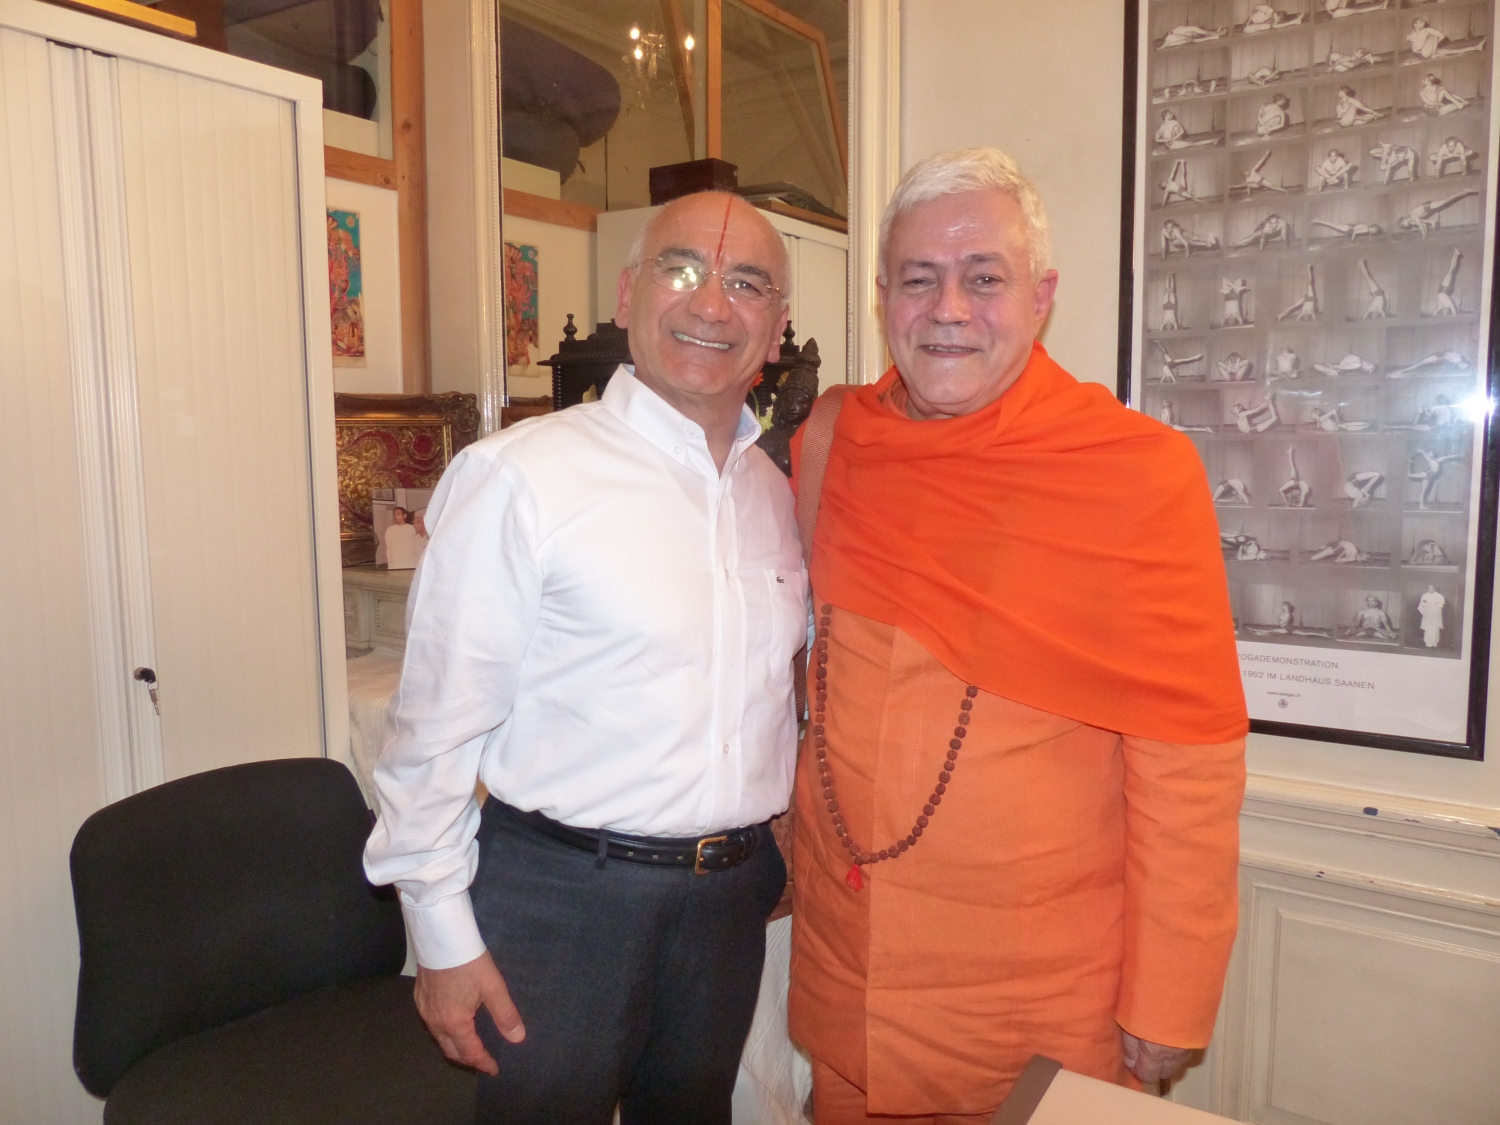 Encuentro de H.H. Jagat Guru Amrta Sūryānanda Mahā Rāja con Guru Jī Srhrīcharan Faeq Biria - Centre de Yoga Iyengar de Paris - 2015, noviembre, 26